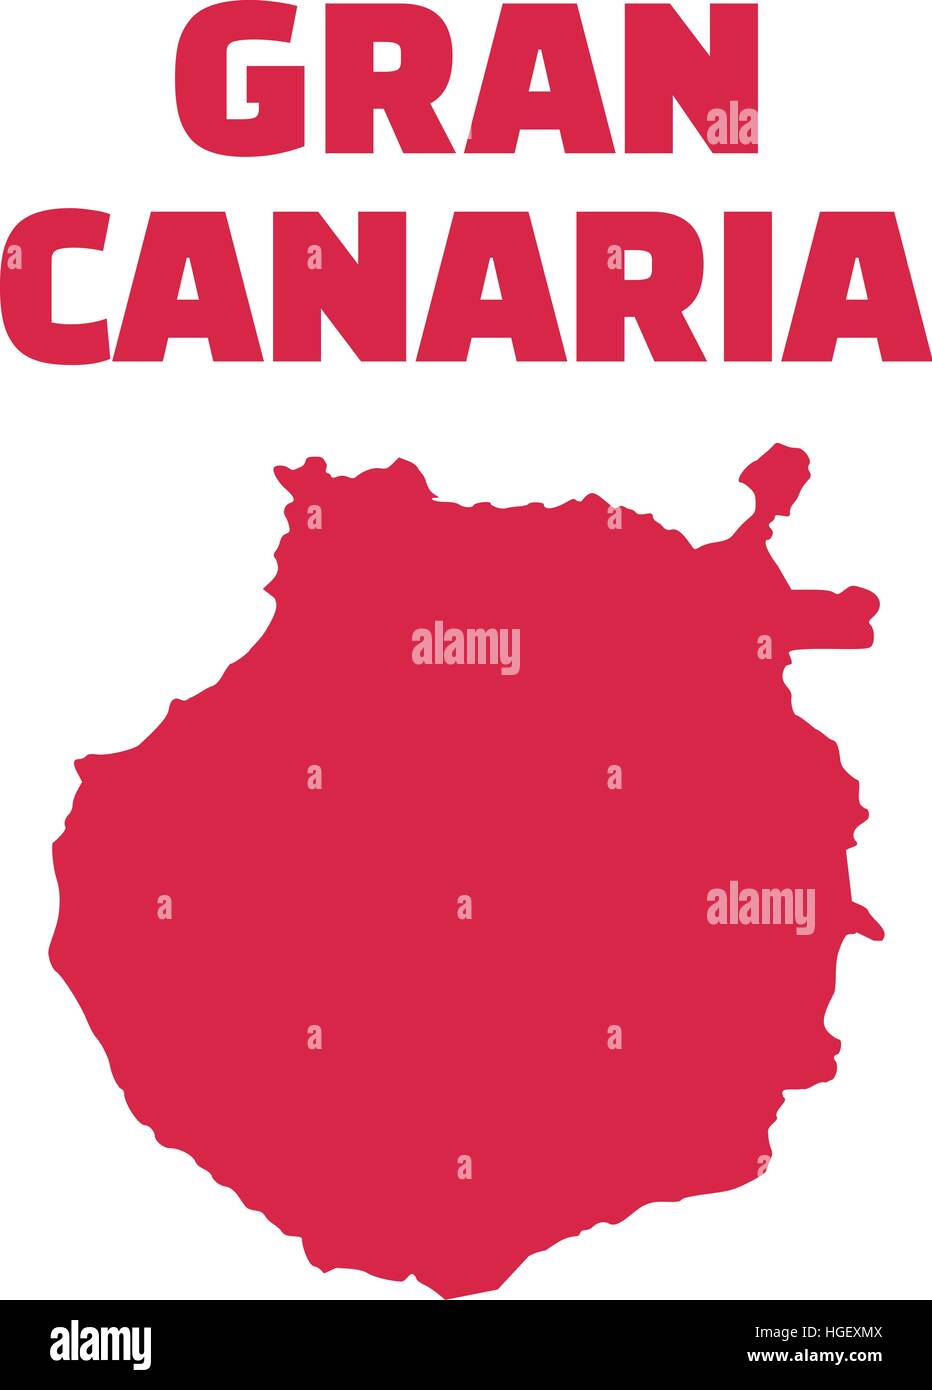 Gran Canaria map with name Stock Vector